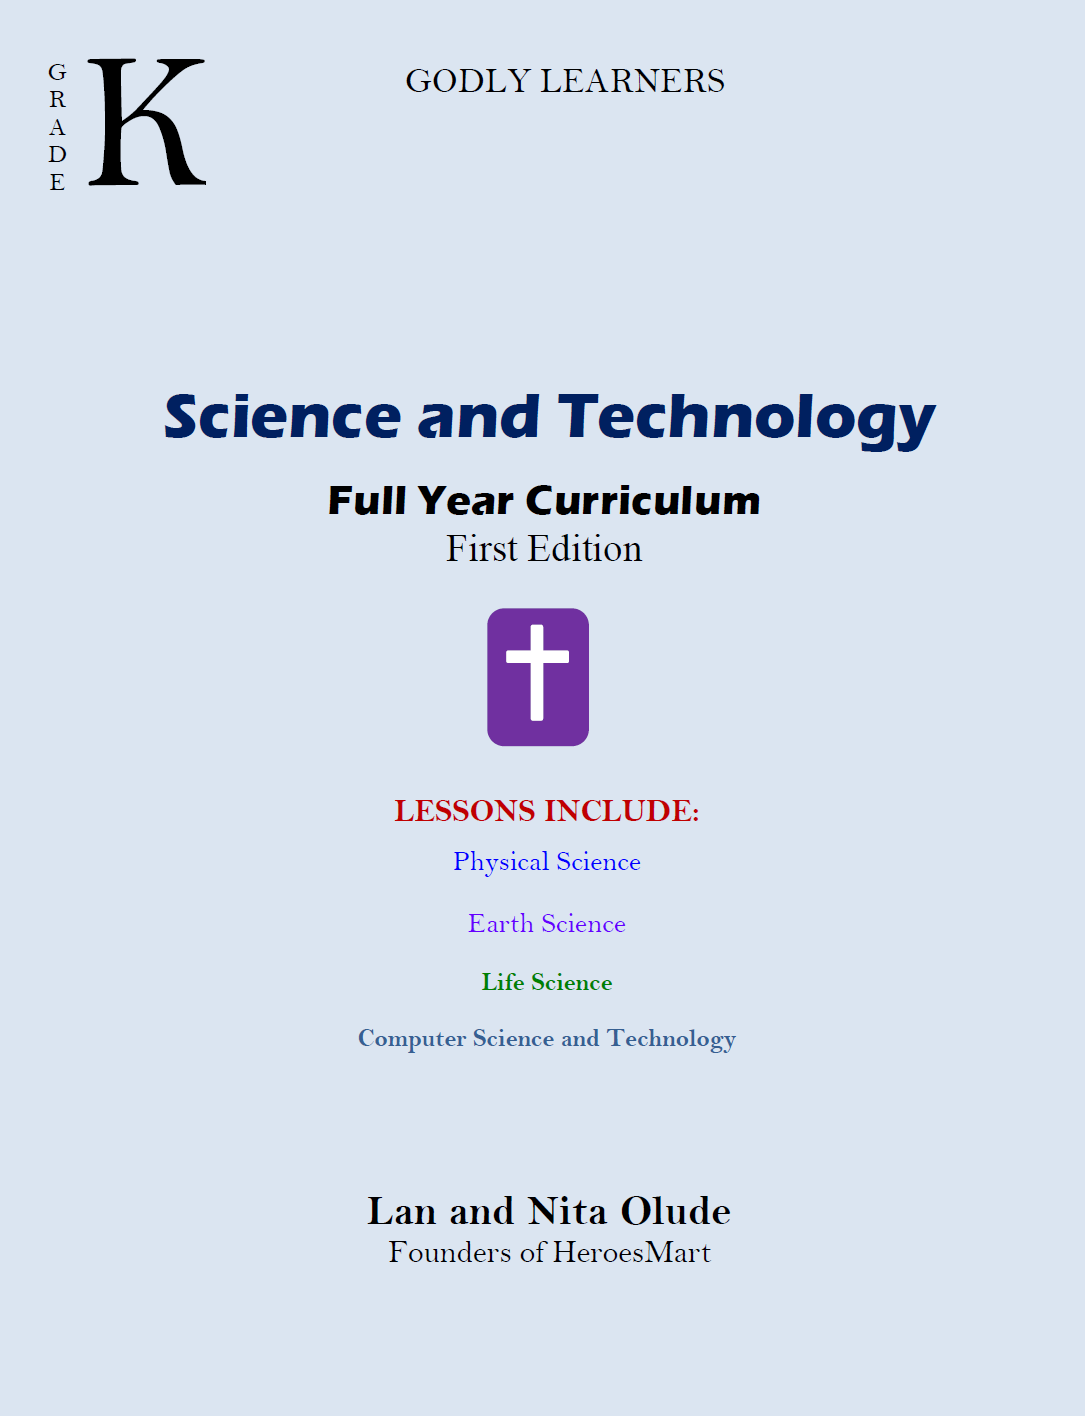 Grade-K Science Full Year Curriculum